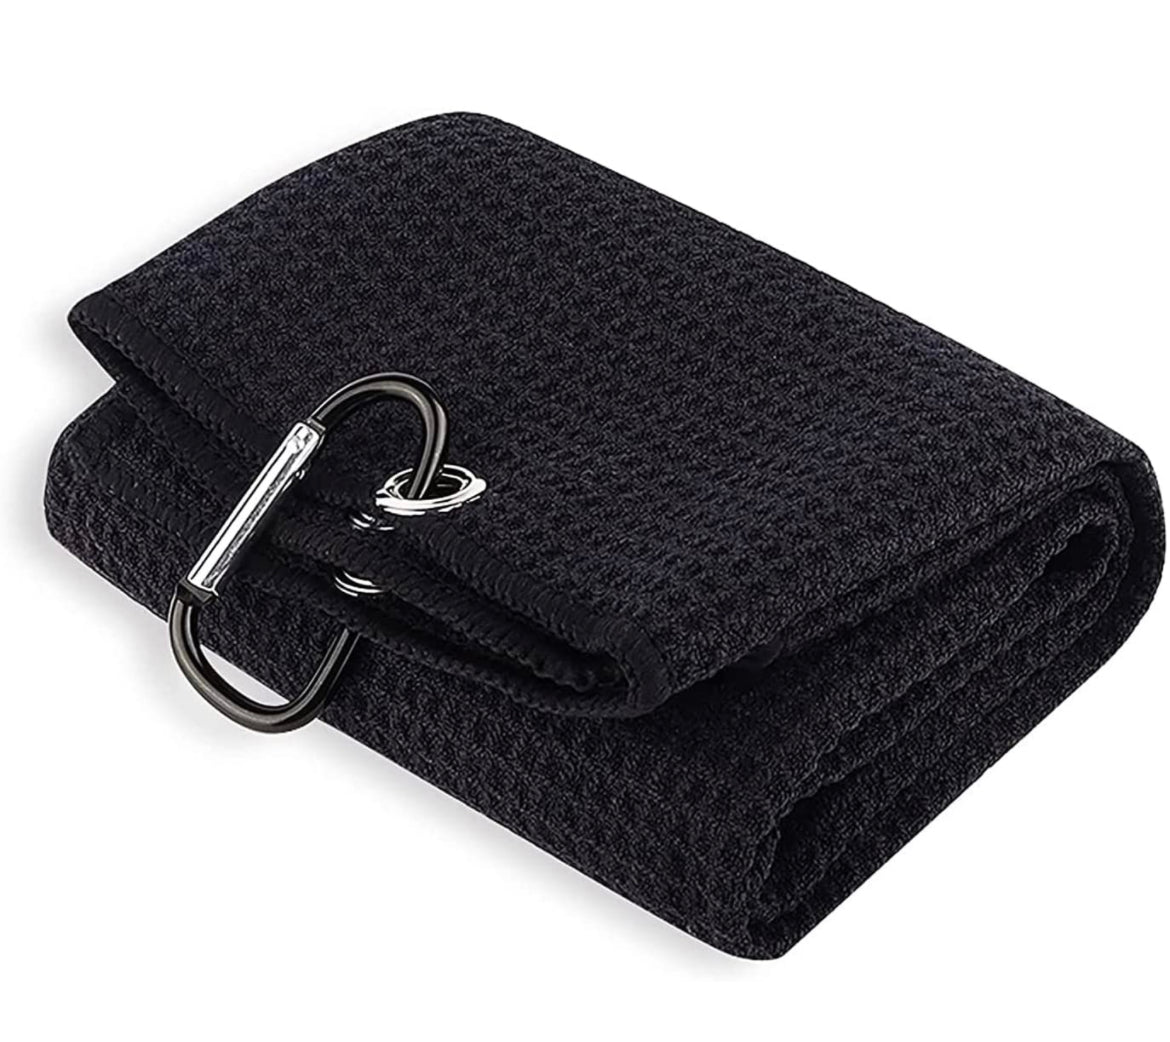 Mobilecaddy Tri-fold microfibre golf towel for golf bag with clip